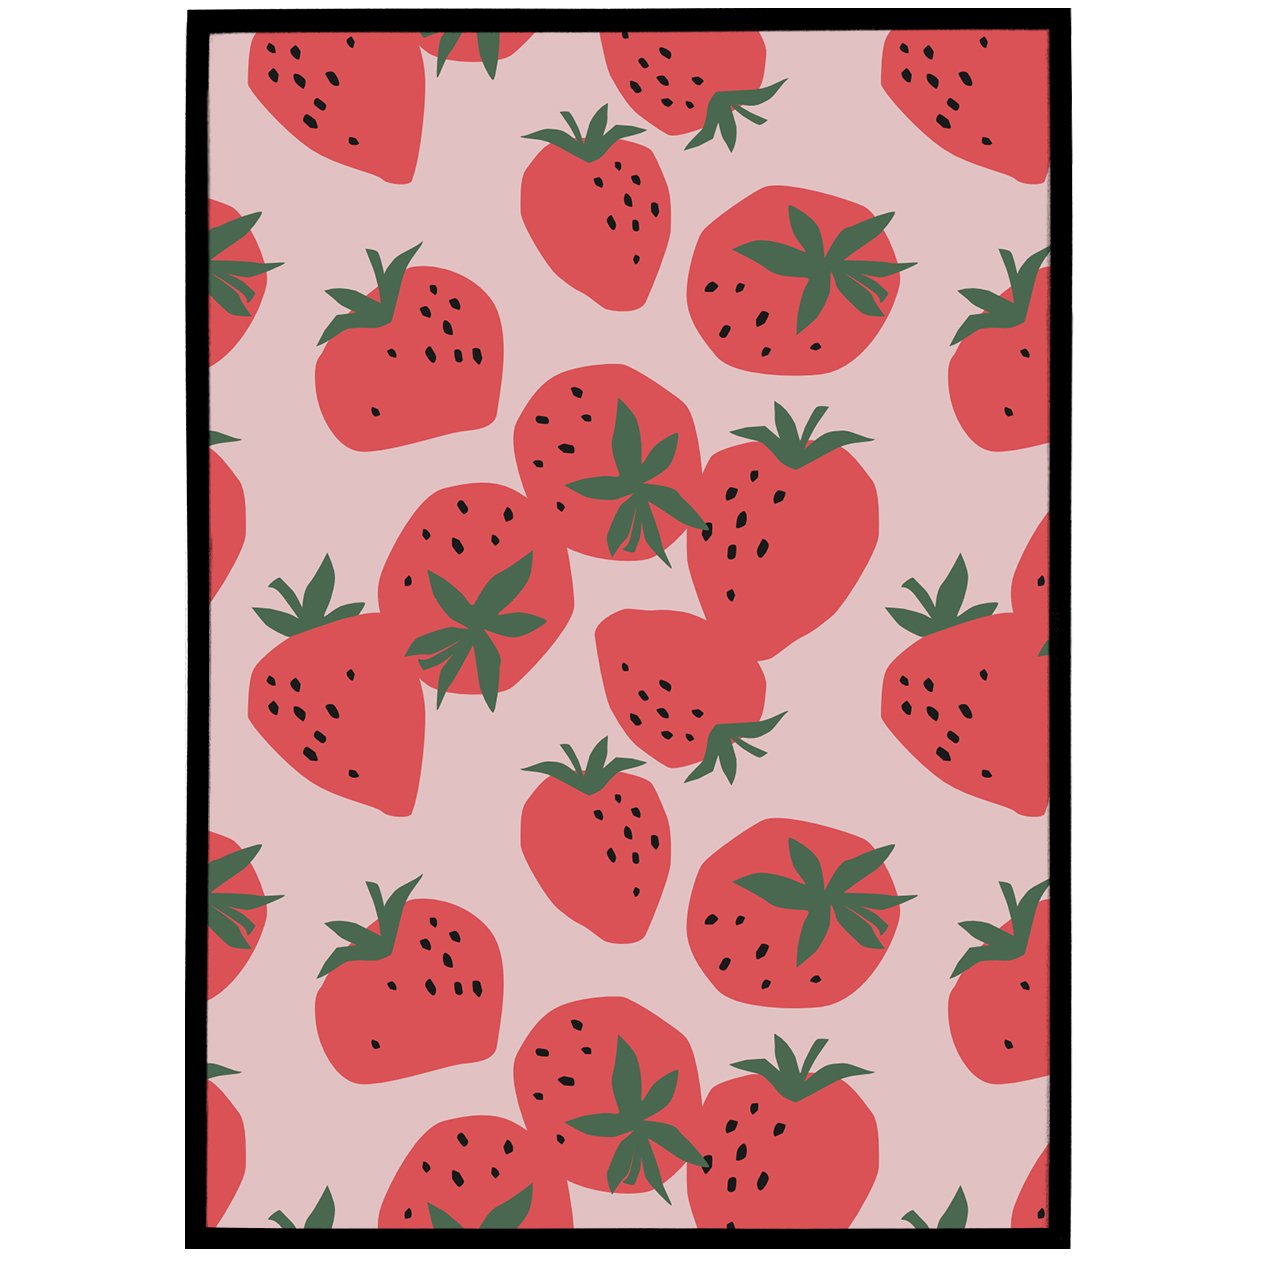 Minimalist Strawberries Poster